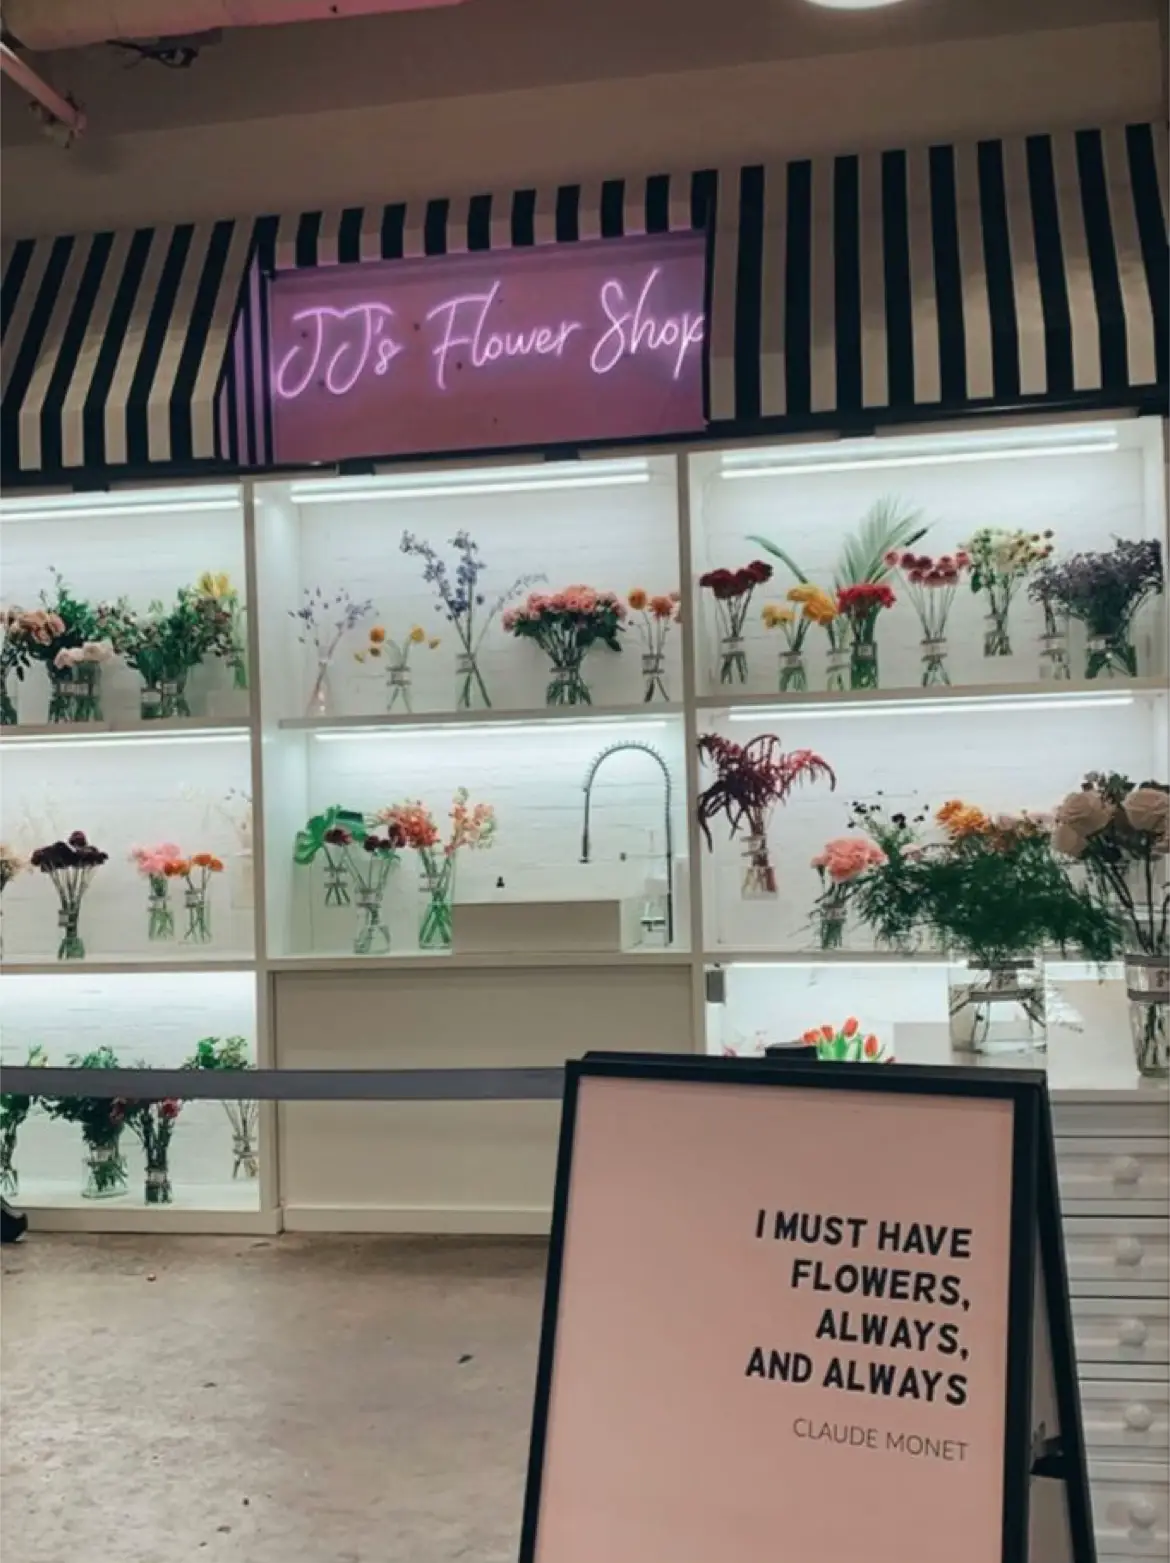 Buy Orchids Florist Flower Shop LED Neon Light Sign – Way Up Gifts